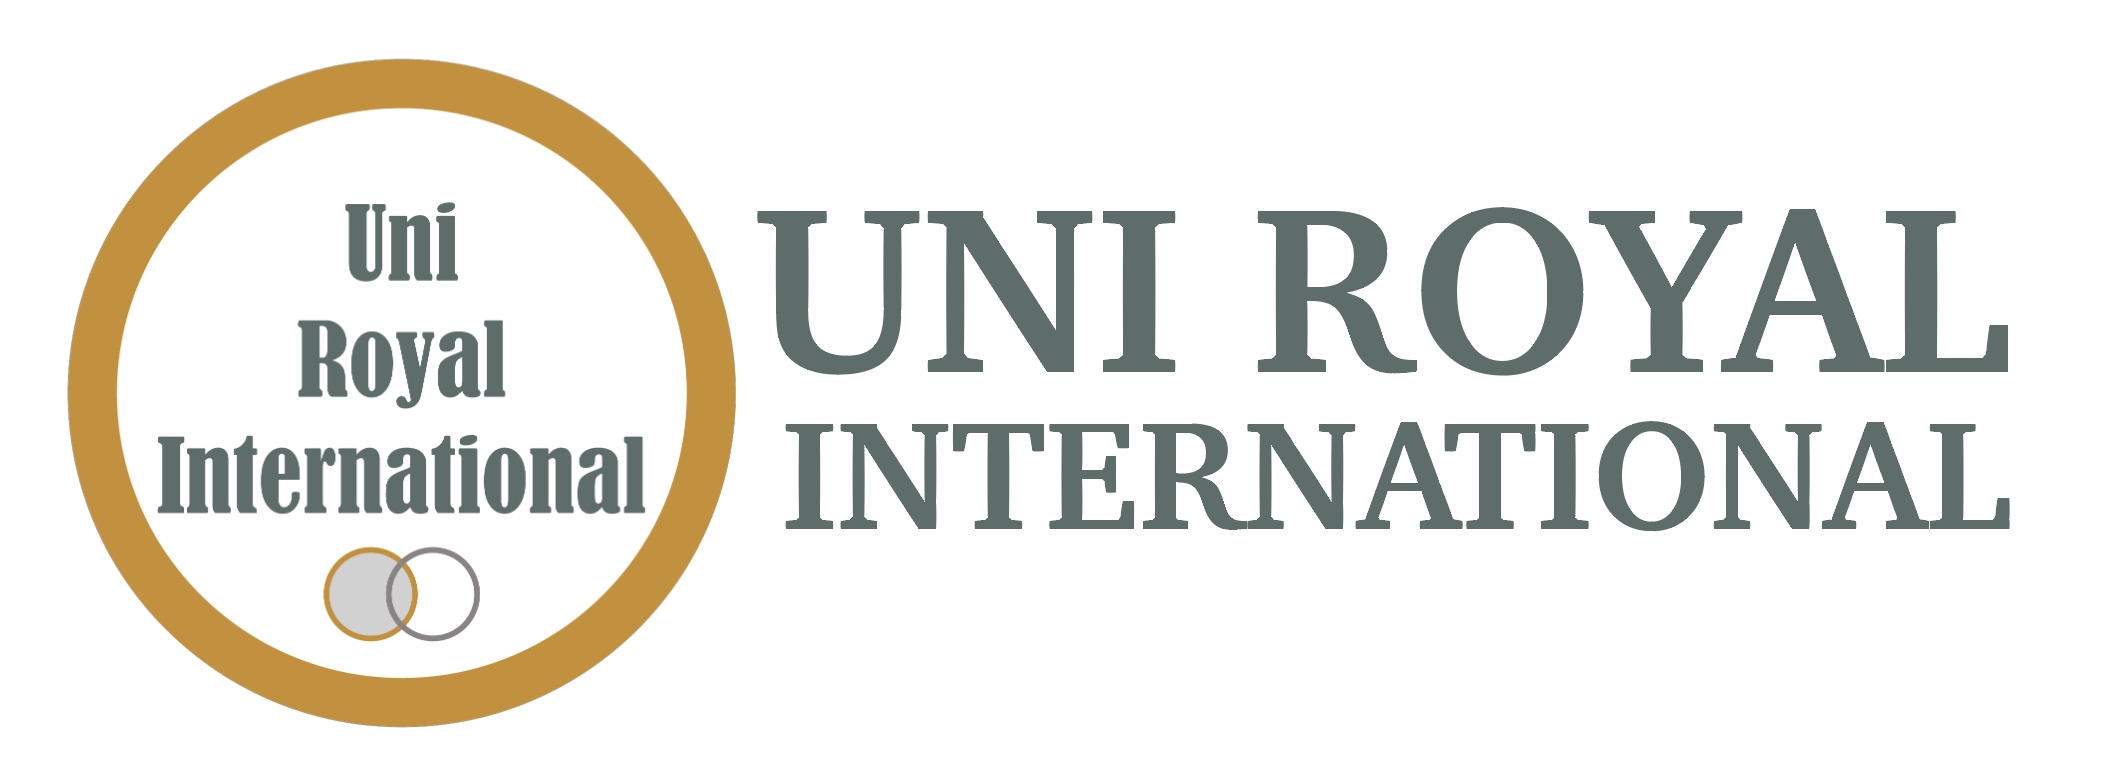 Uni-royal International